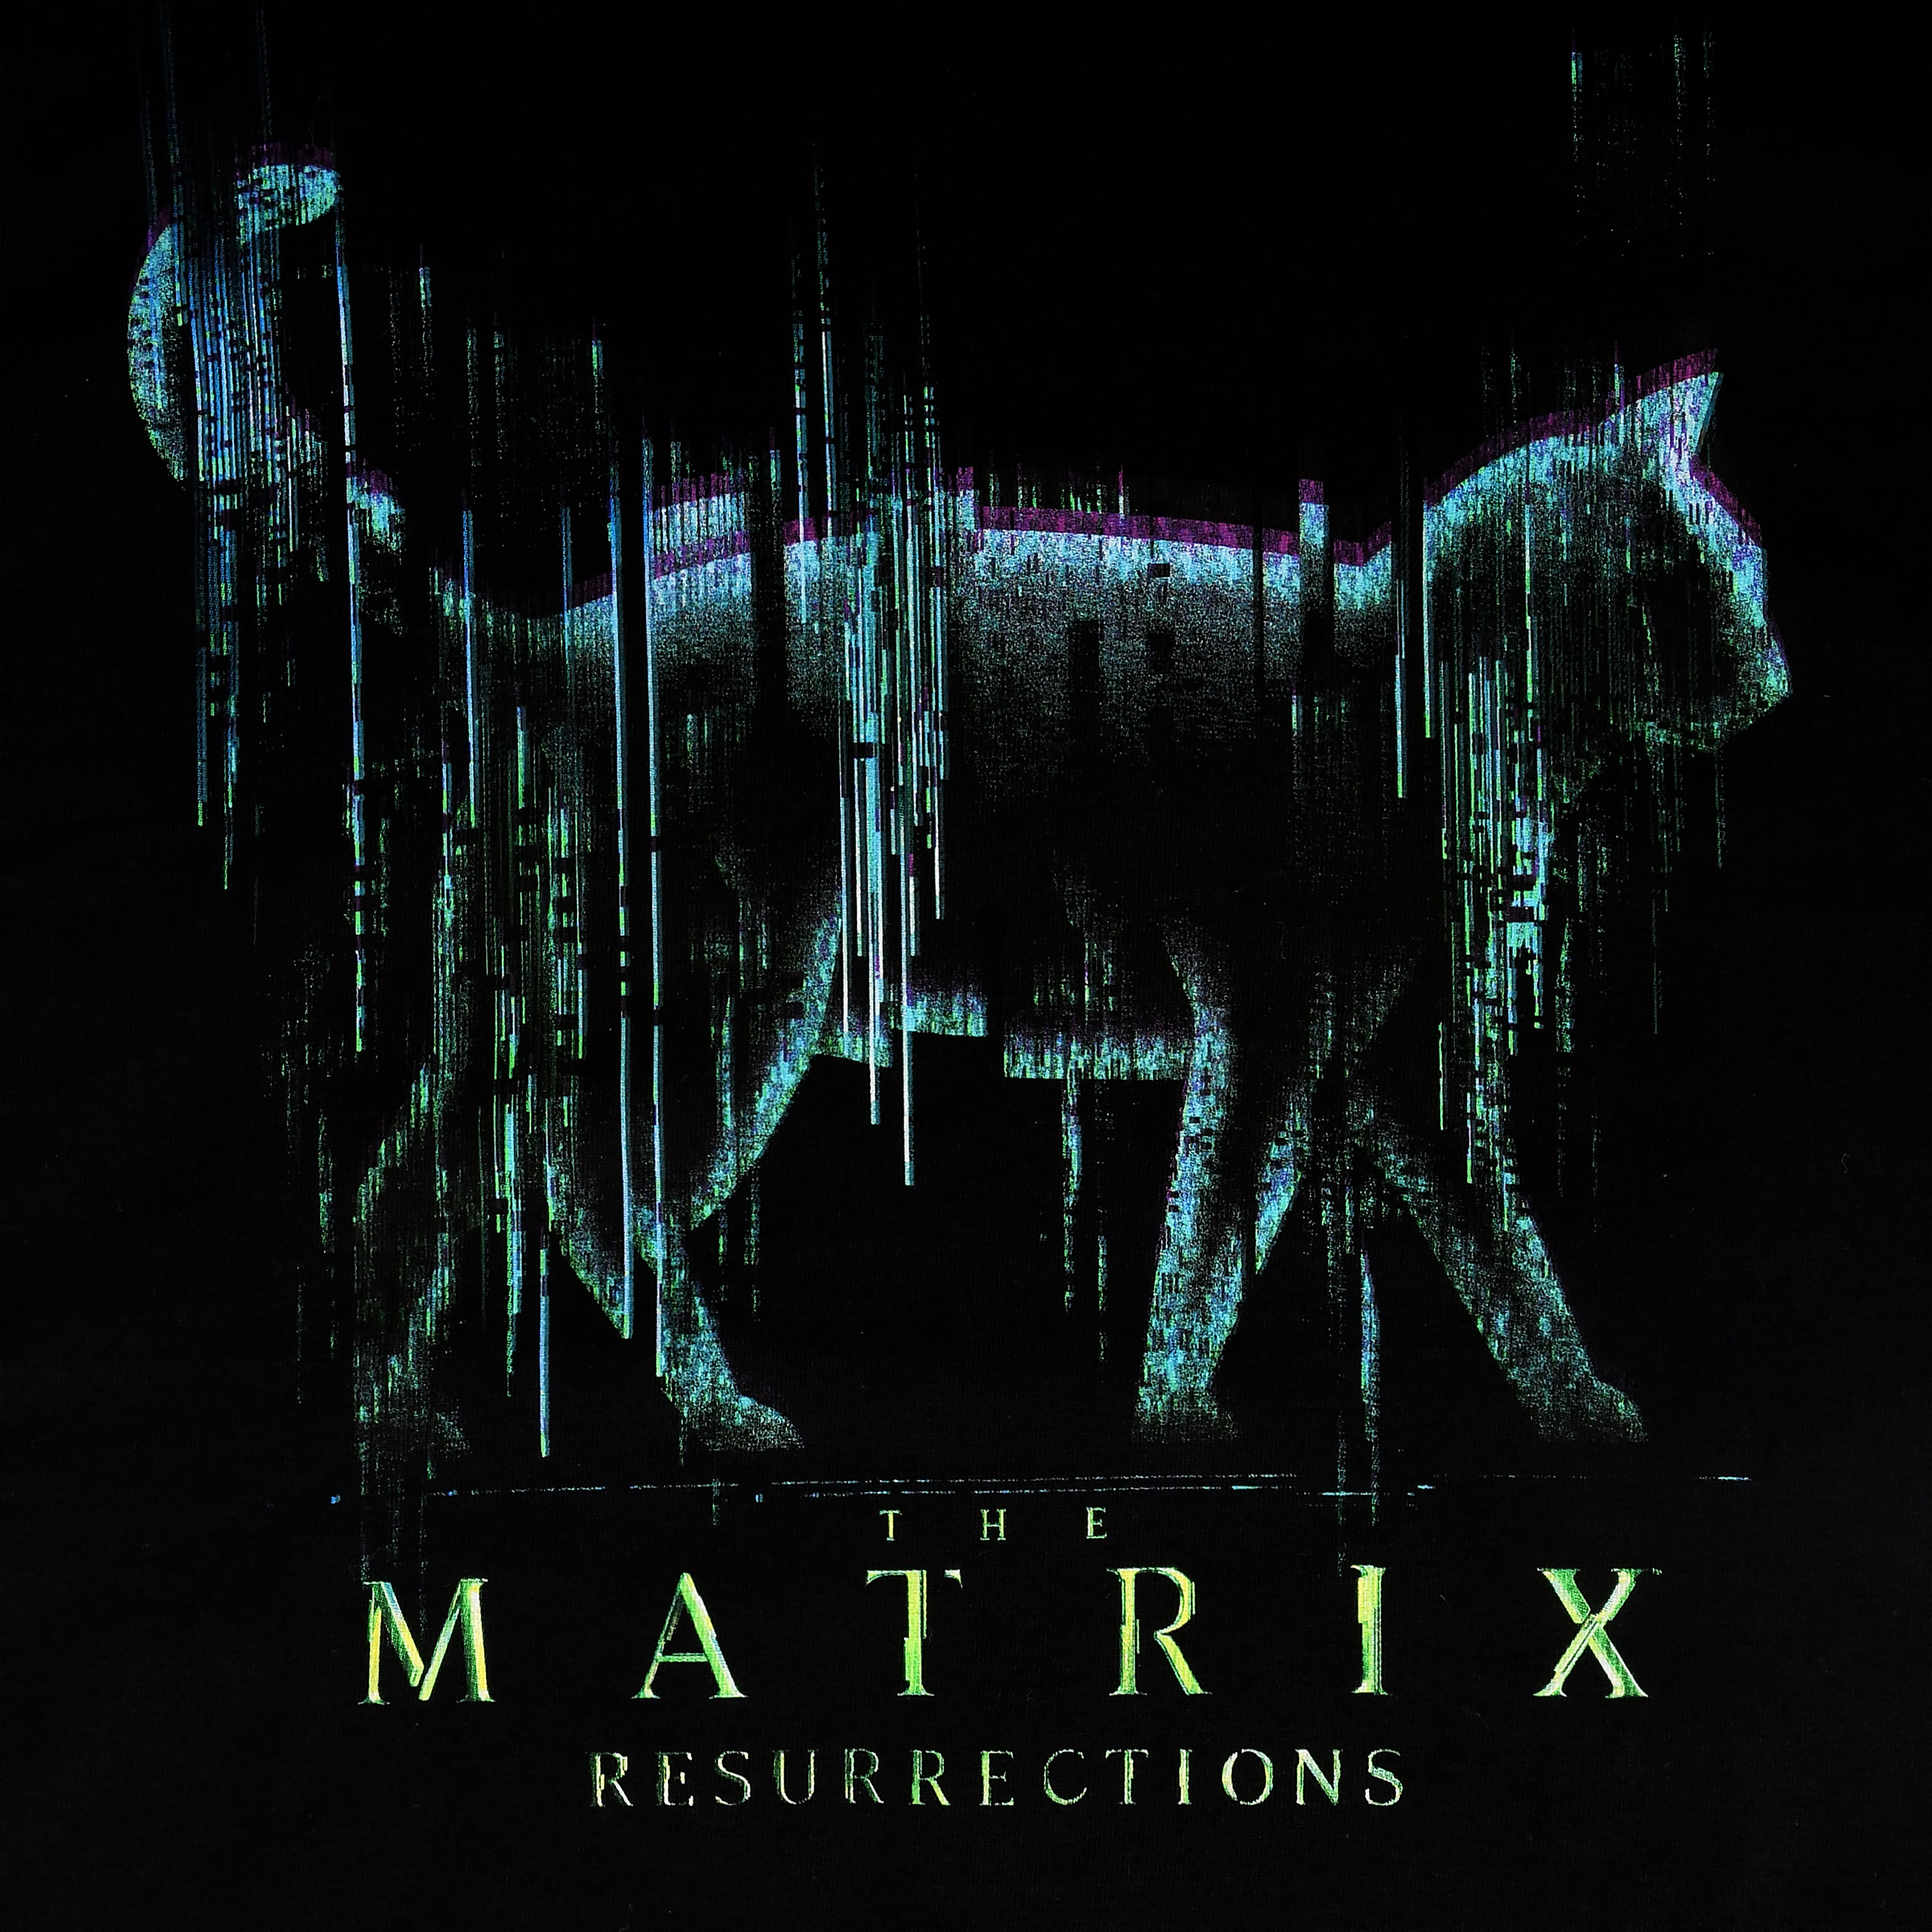 Matrix - Black Cat T-Shirt schwarz